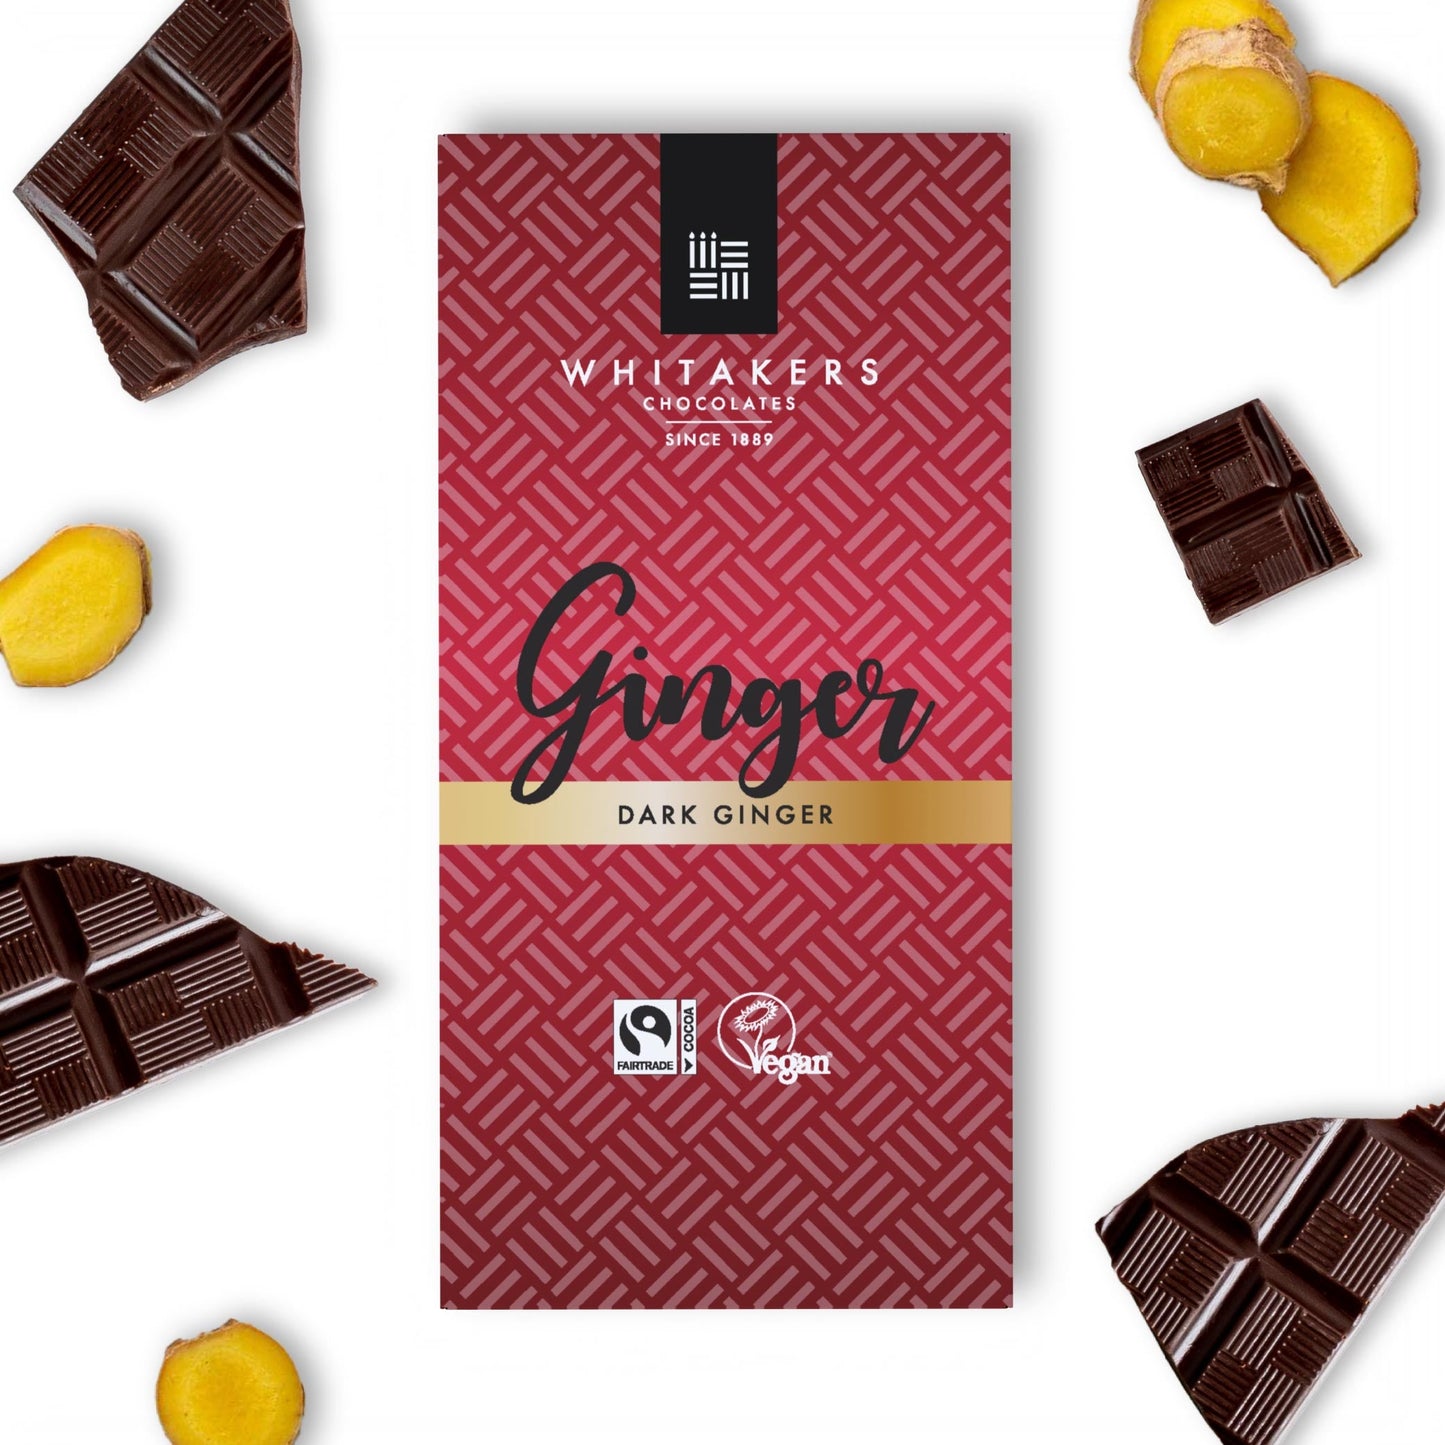 90g dark ginger chocolate bar